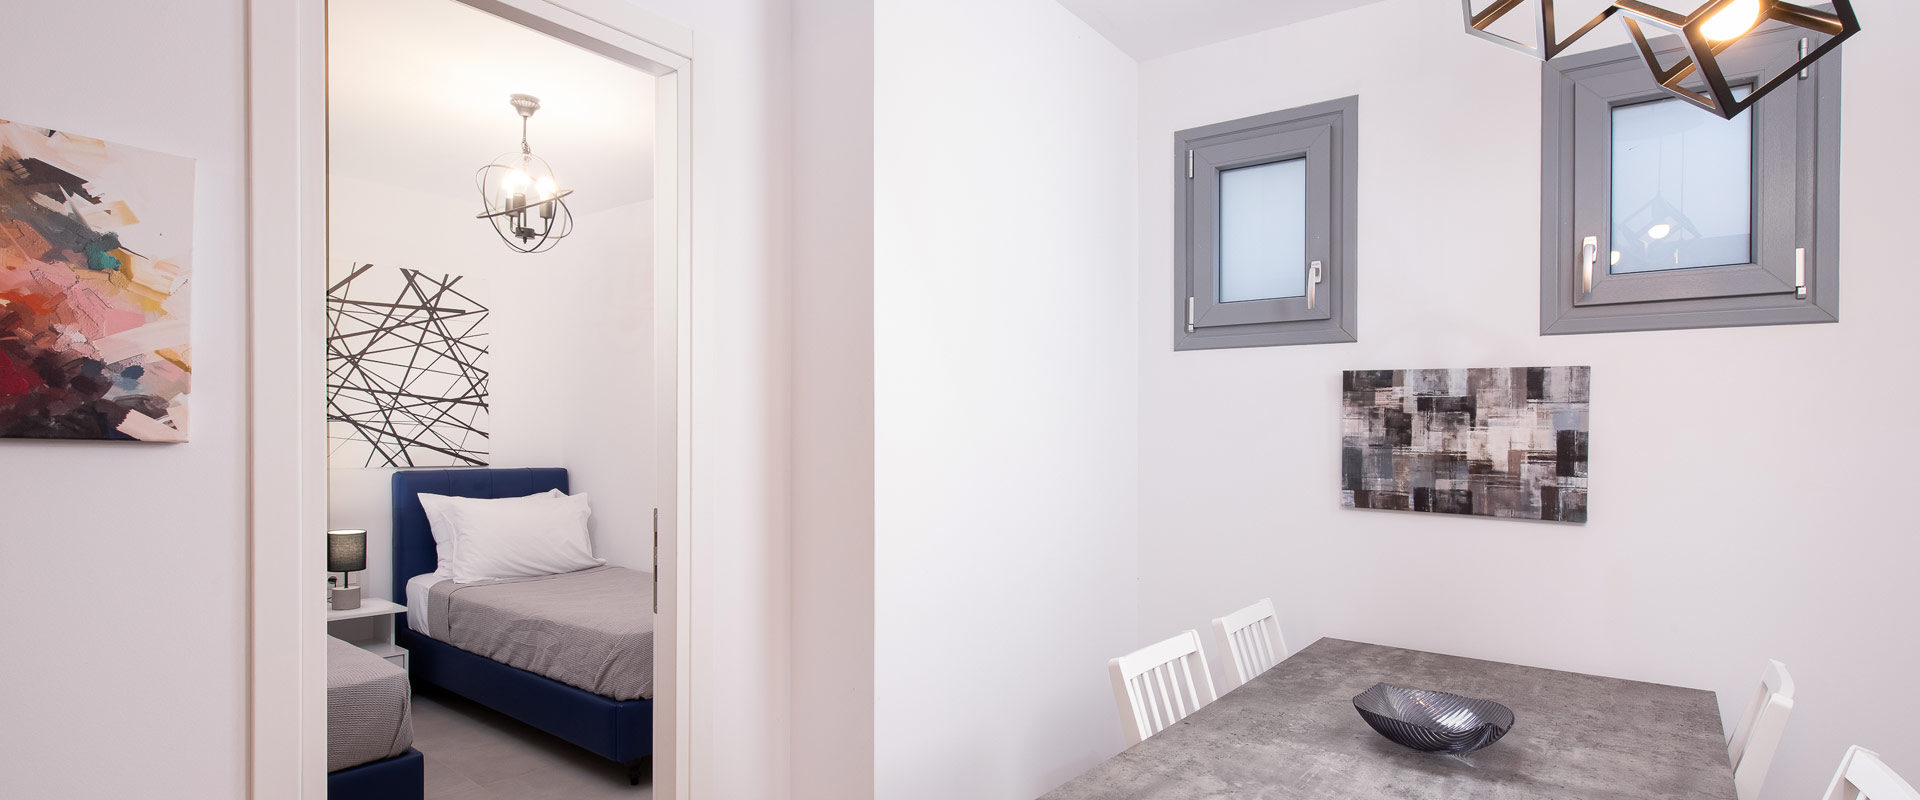 Three Bedroom Semi Basement Apartment Interior